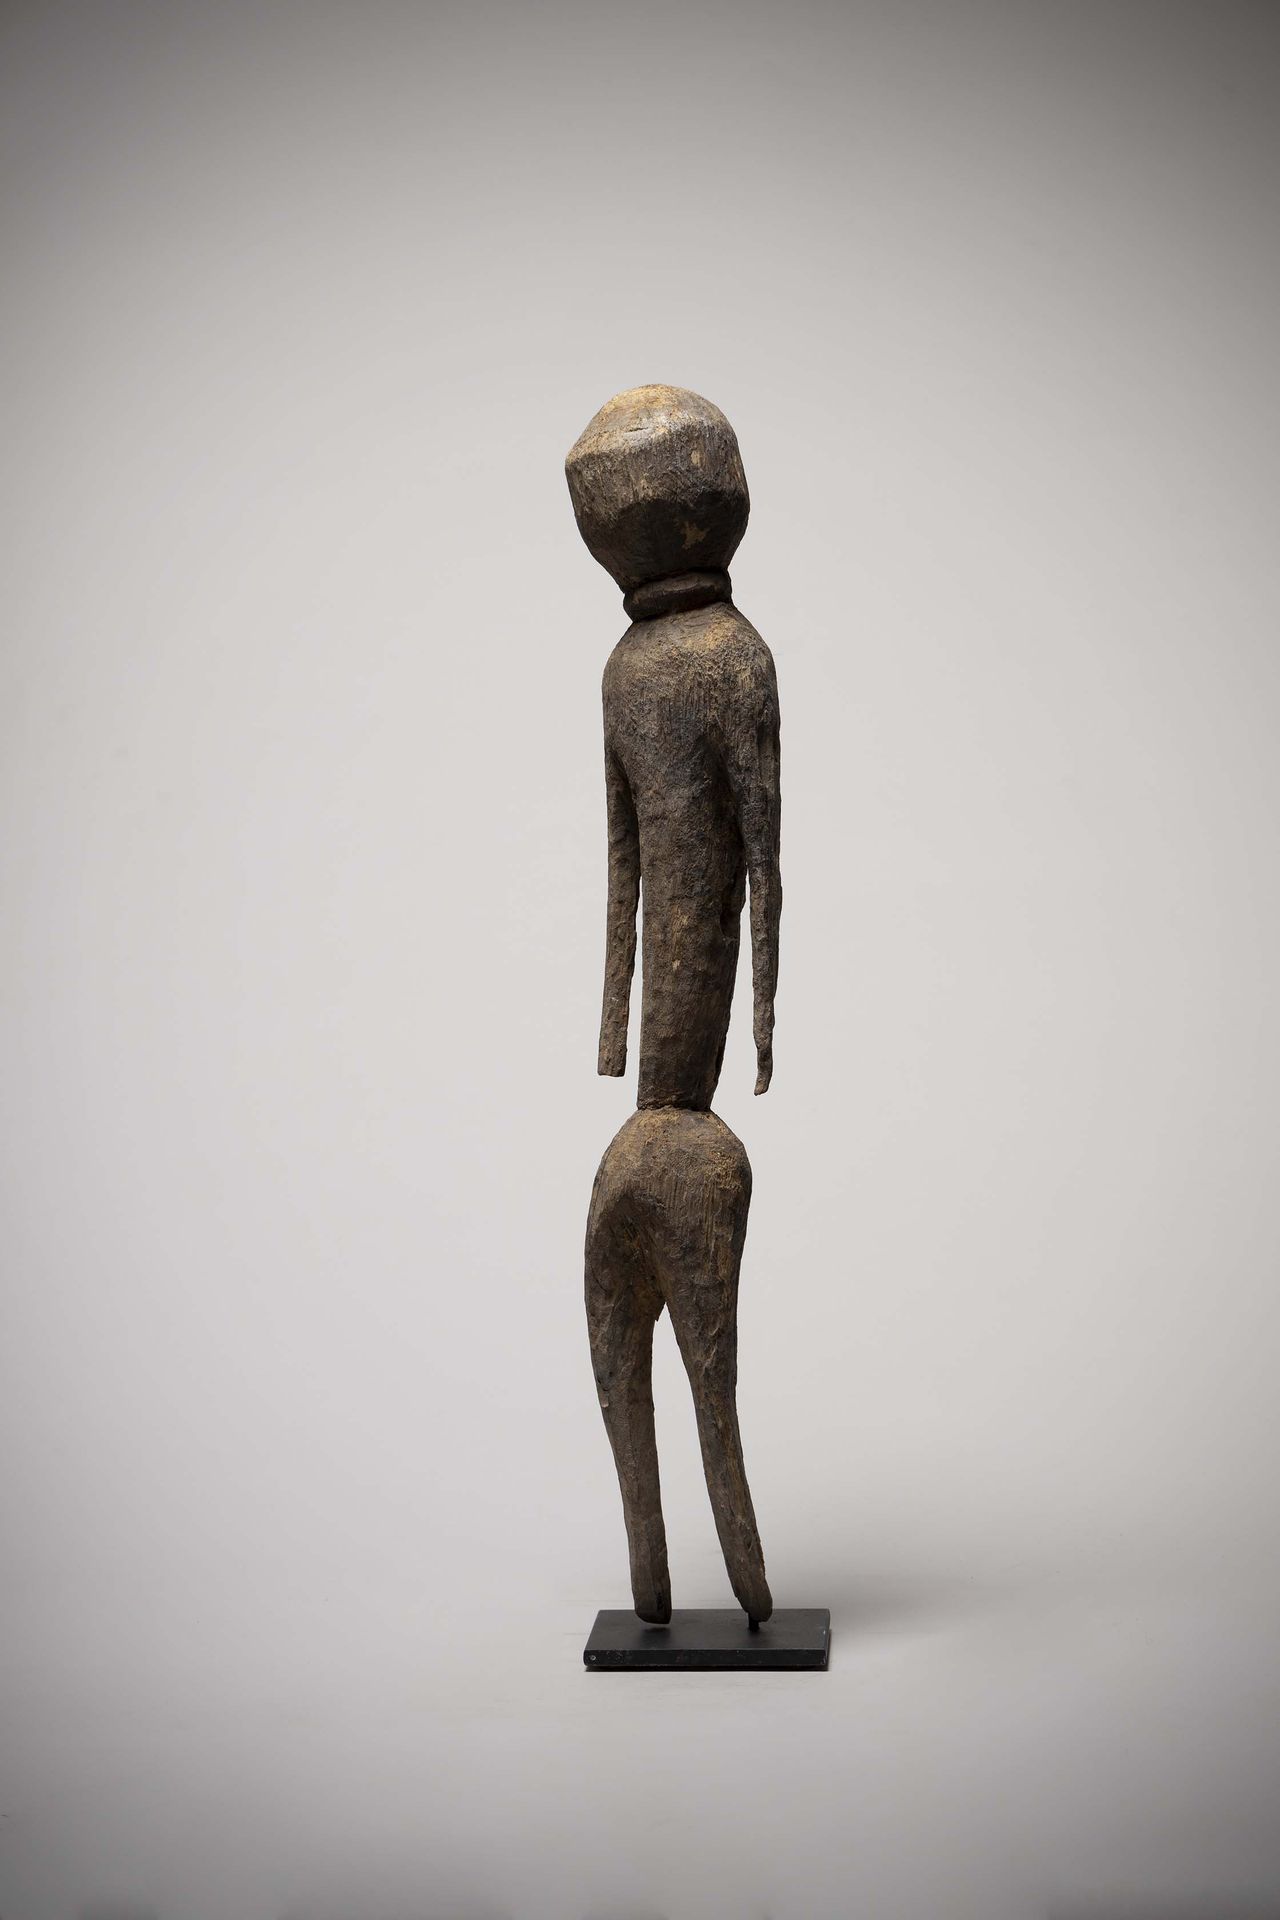 Null Moba

(Toga) Estatua larga de madera descolorida con restos de libaciones

&hellip;